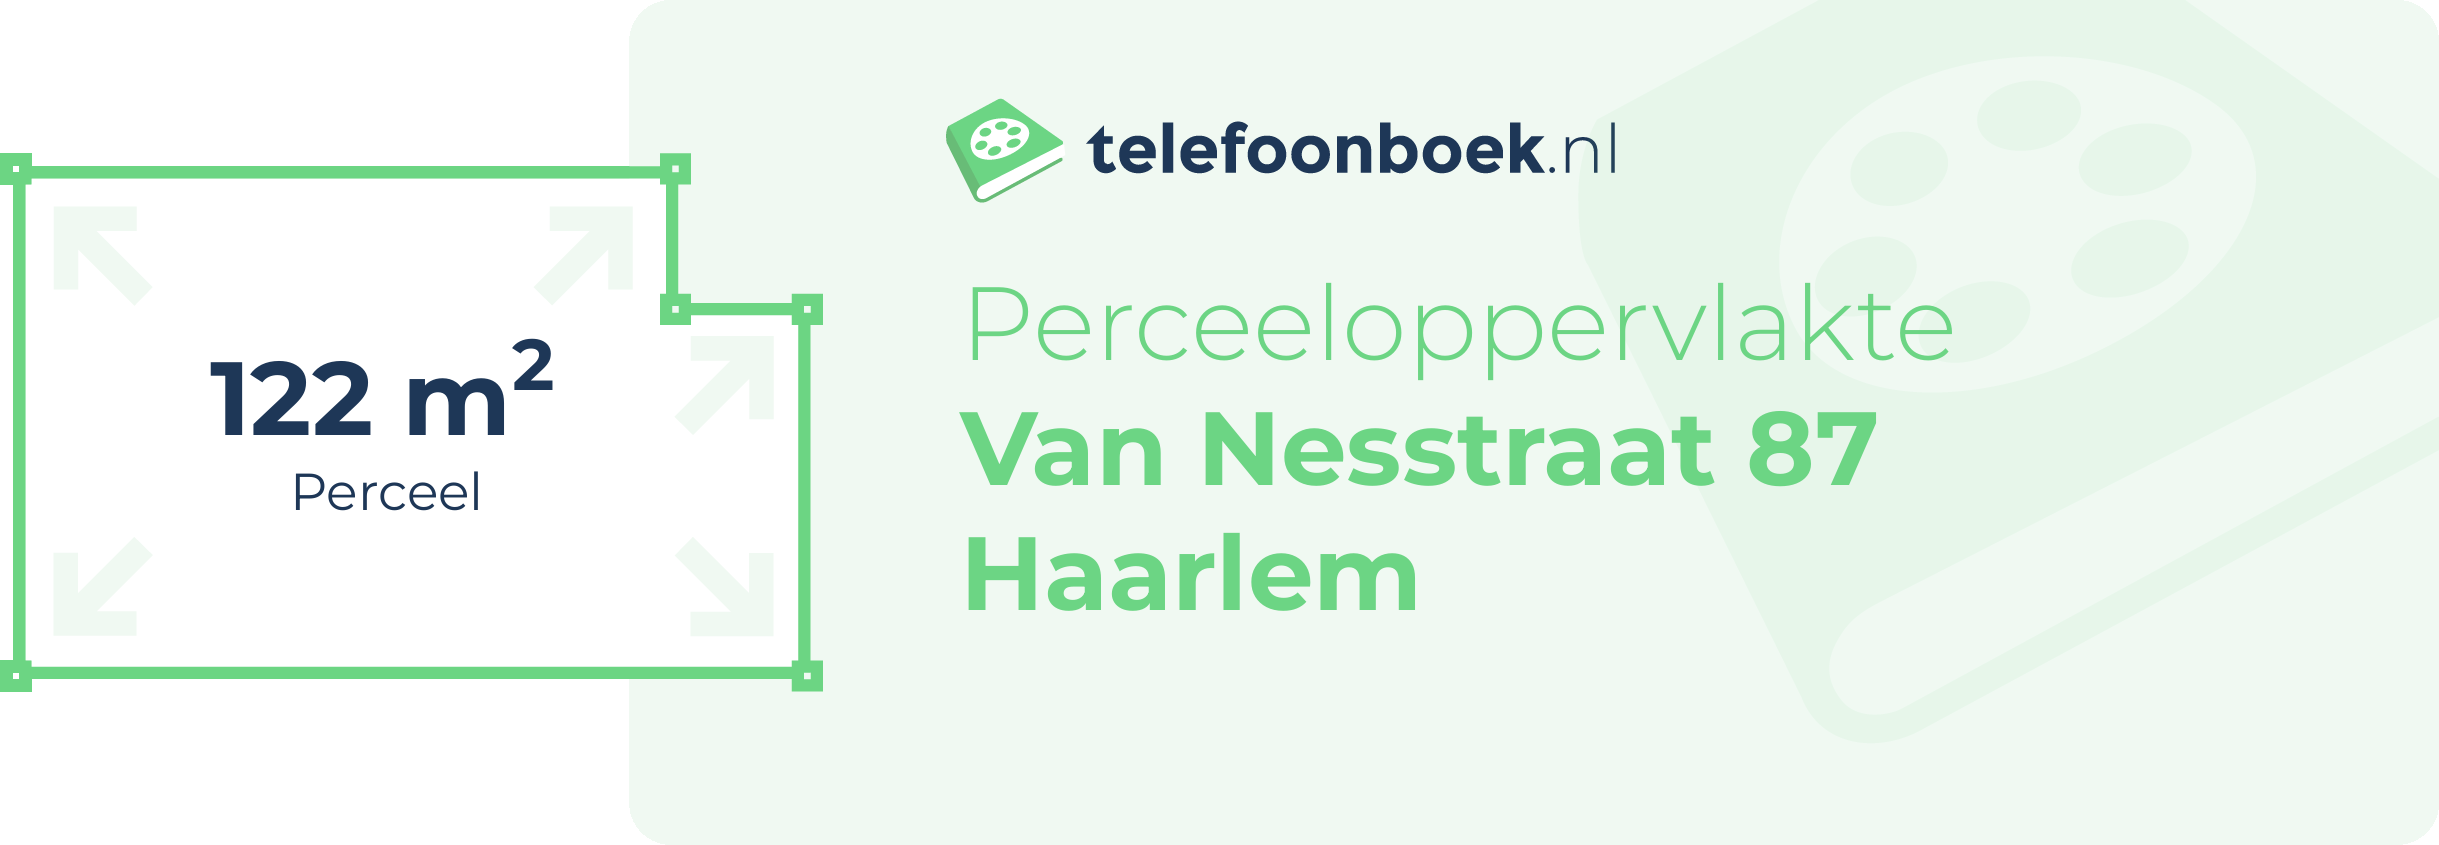 Perceeloppervlakte Van Nesstraat 87 Haarlem